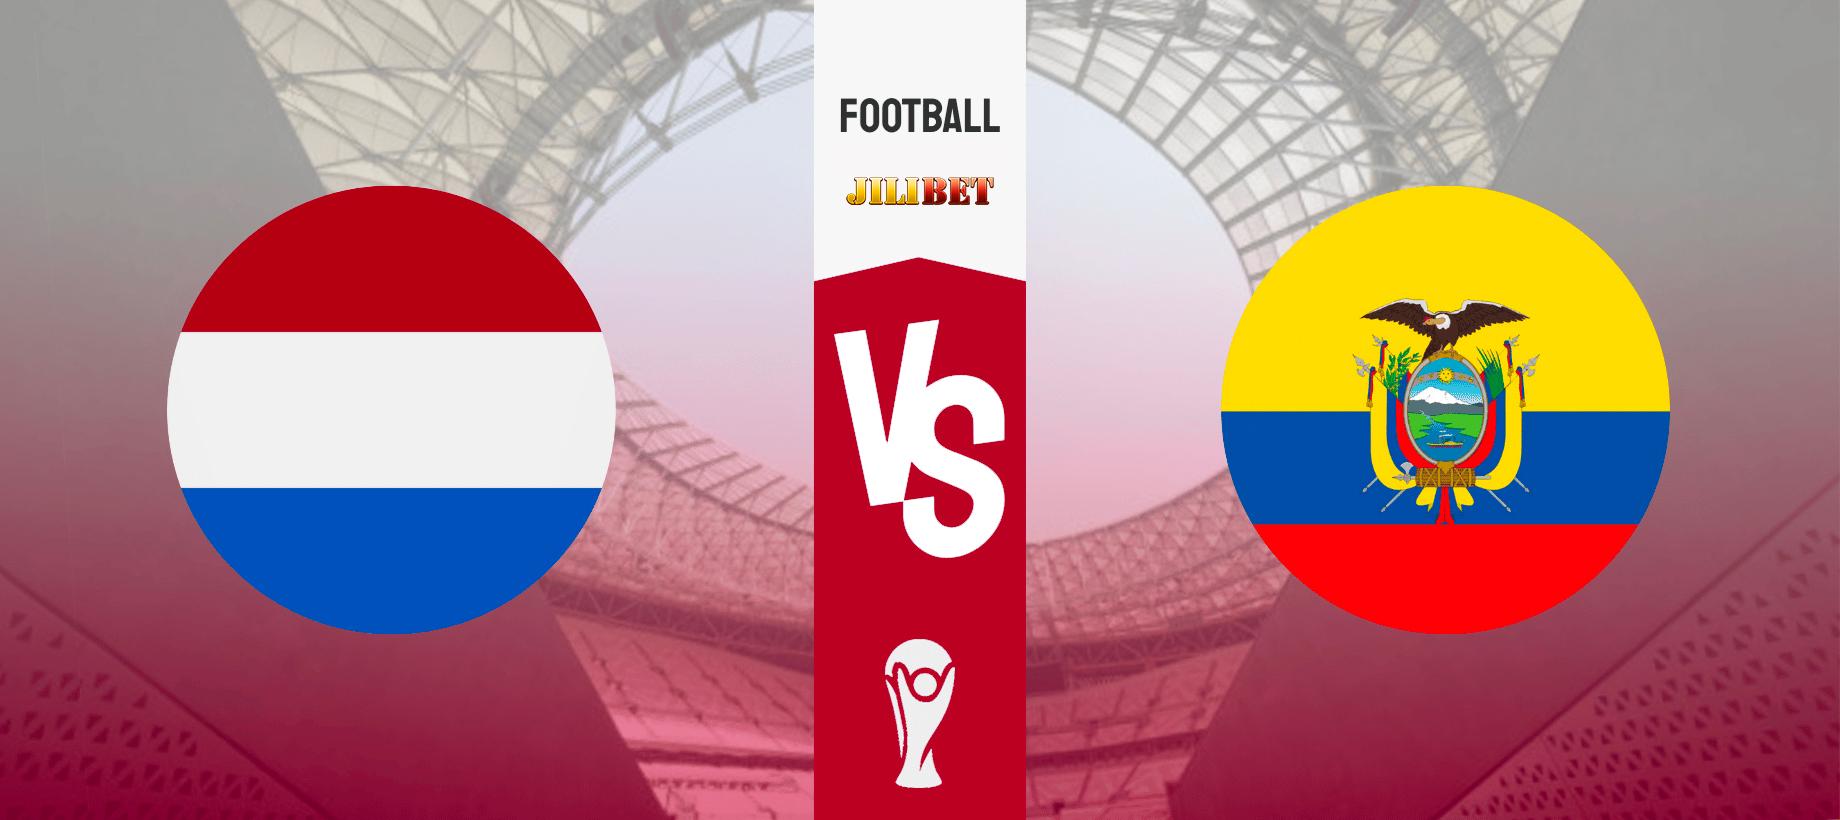 Netherlands vs Ecuador Prediction